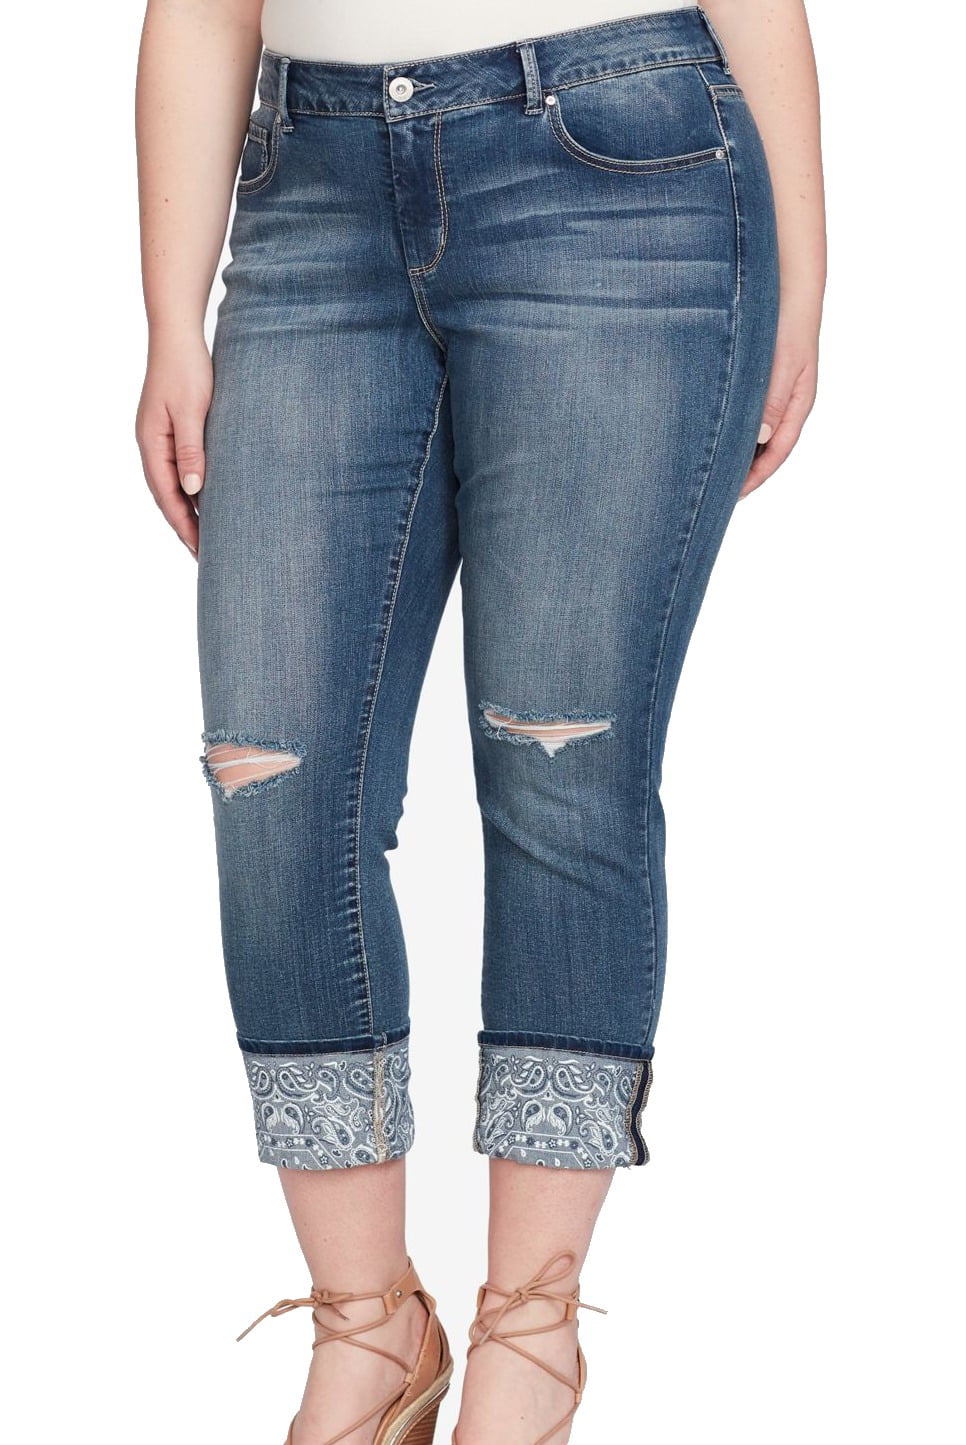 Jessica Simpson - Jessica Simpson Womens Plus Stretch Cuffed Jeans ...